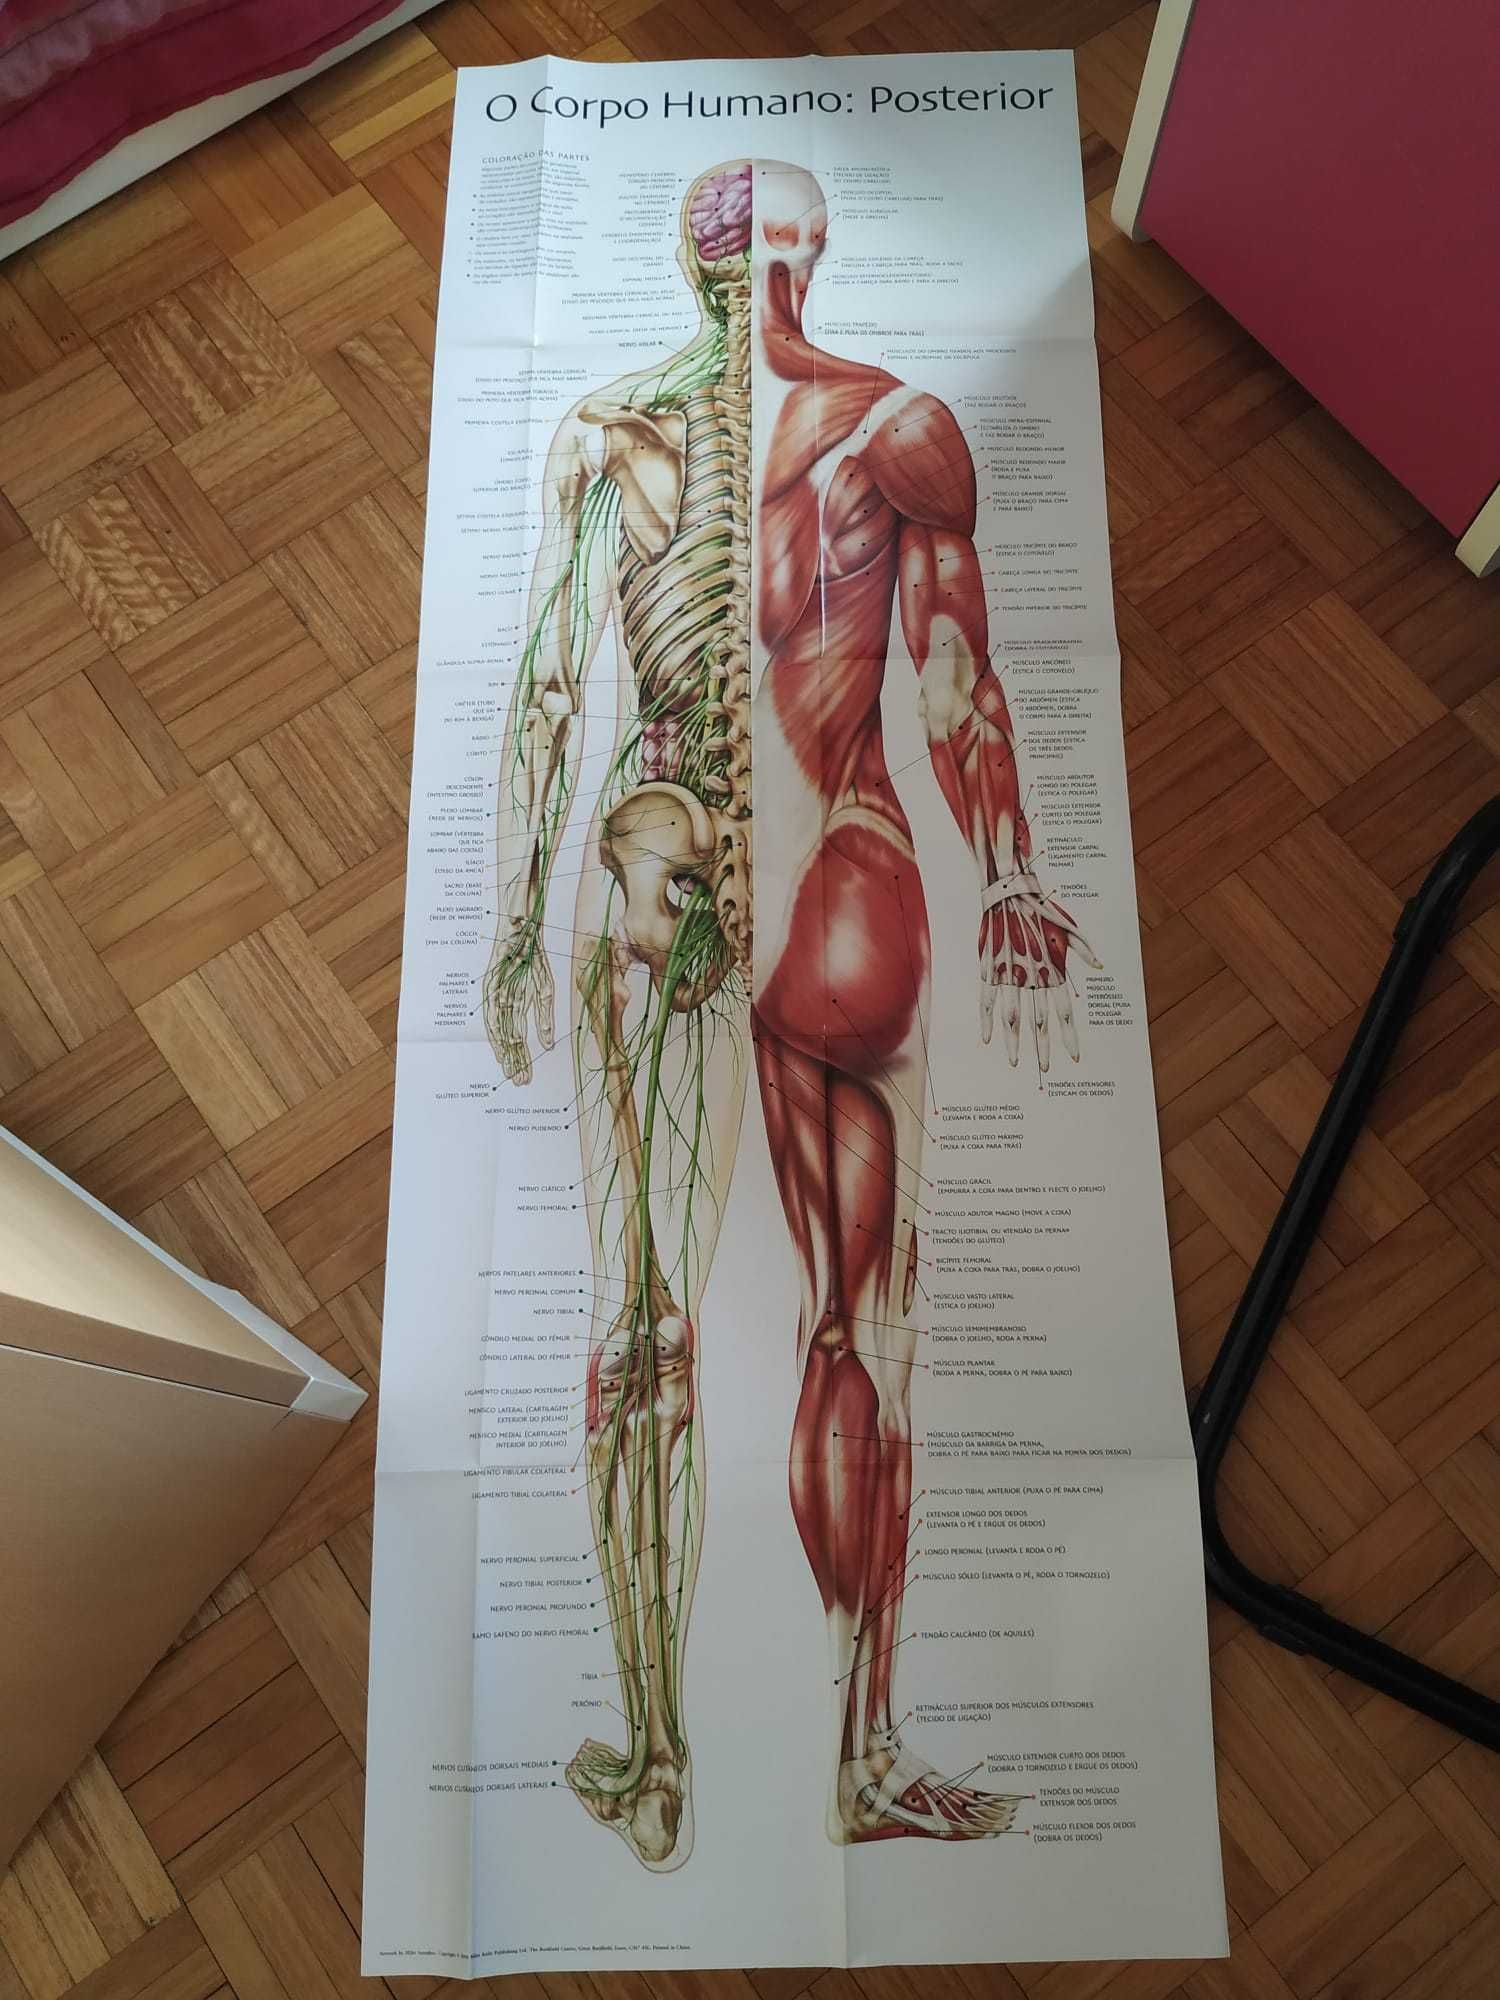 Livro "O Corpo Humano" - c/ posters e acetatos